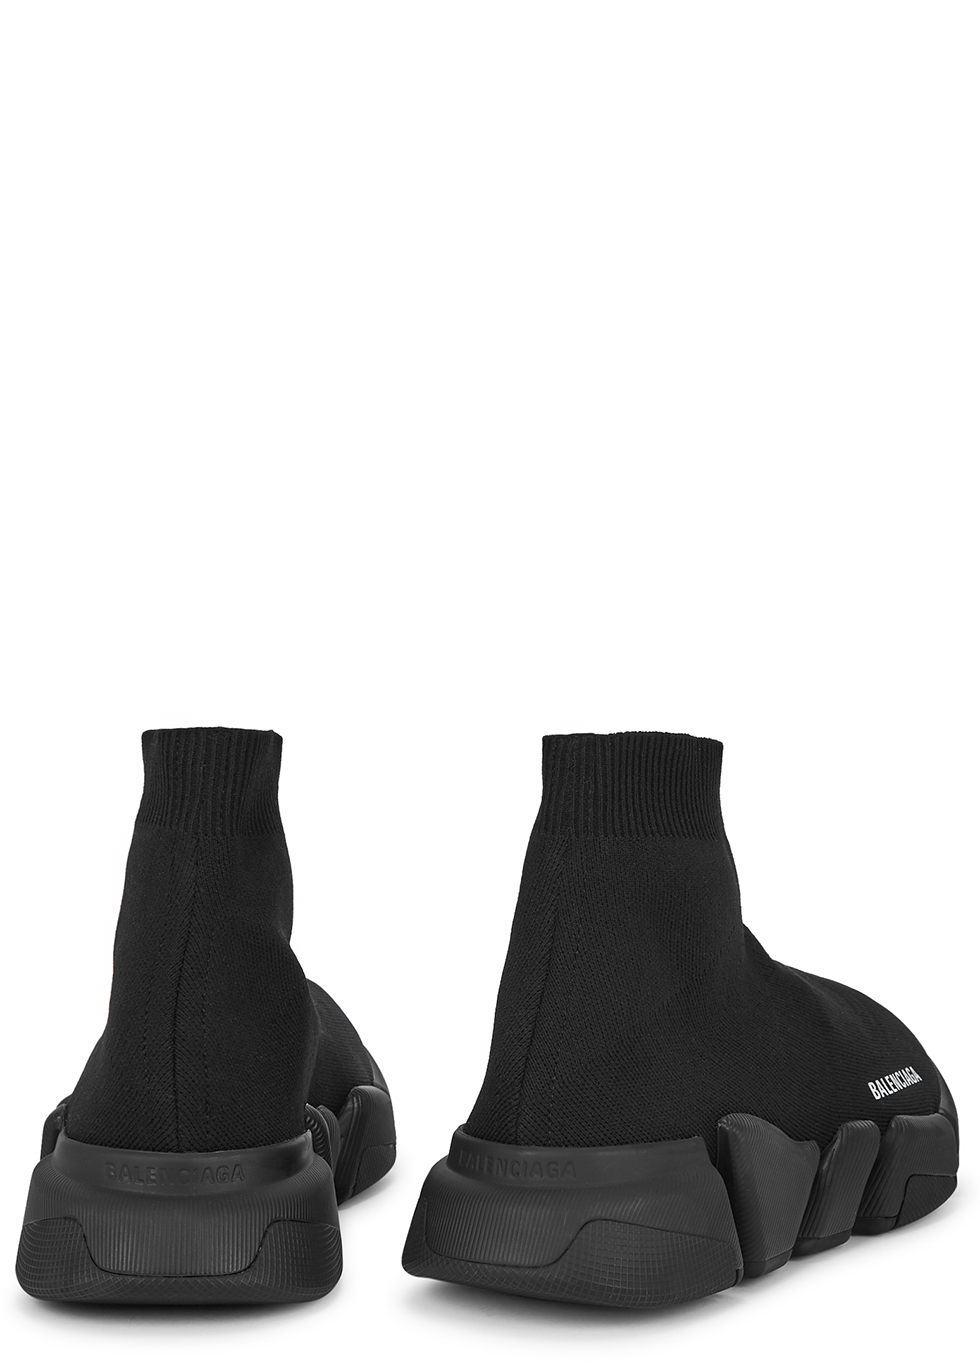 Balenciaga Speed 2 Trainer Knit Black  Balenciaga  617239 W1701 1013